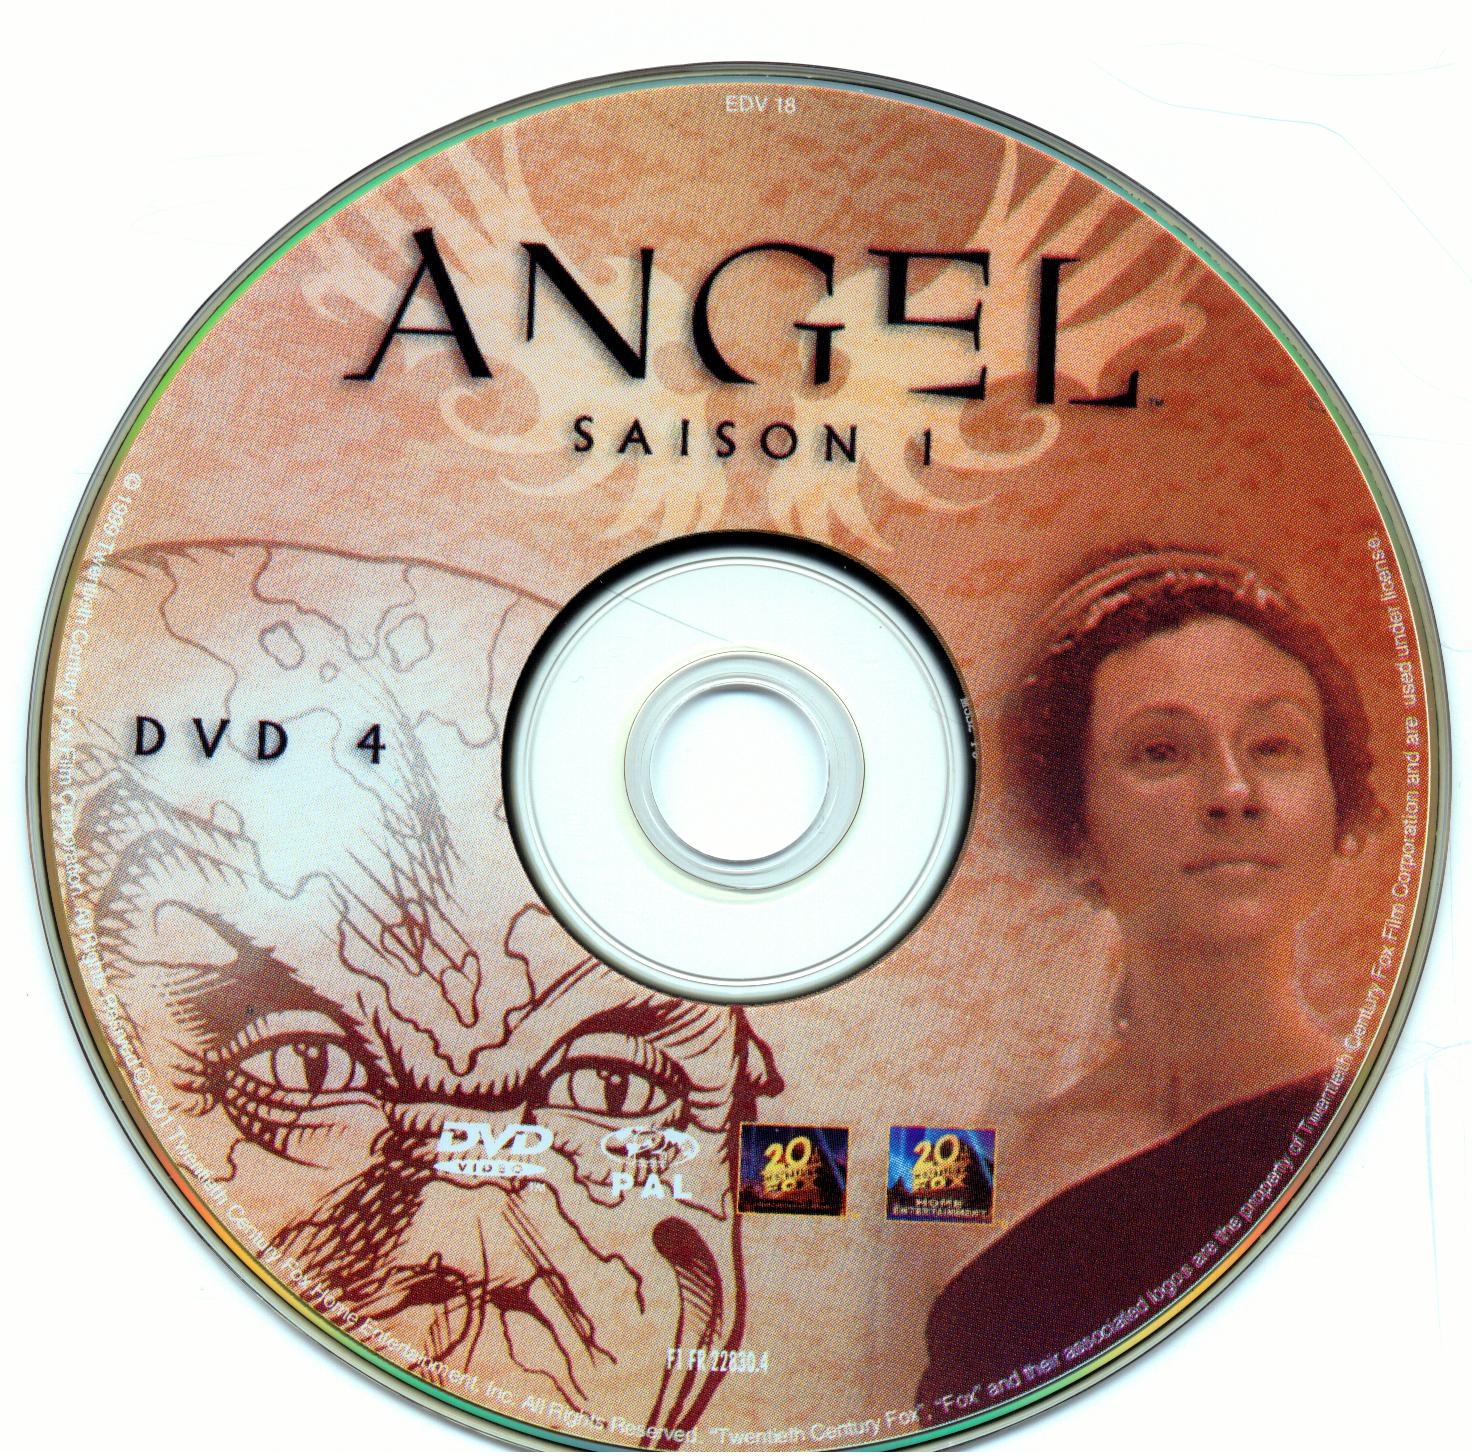 Angel Saison 1 dvd 4